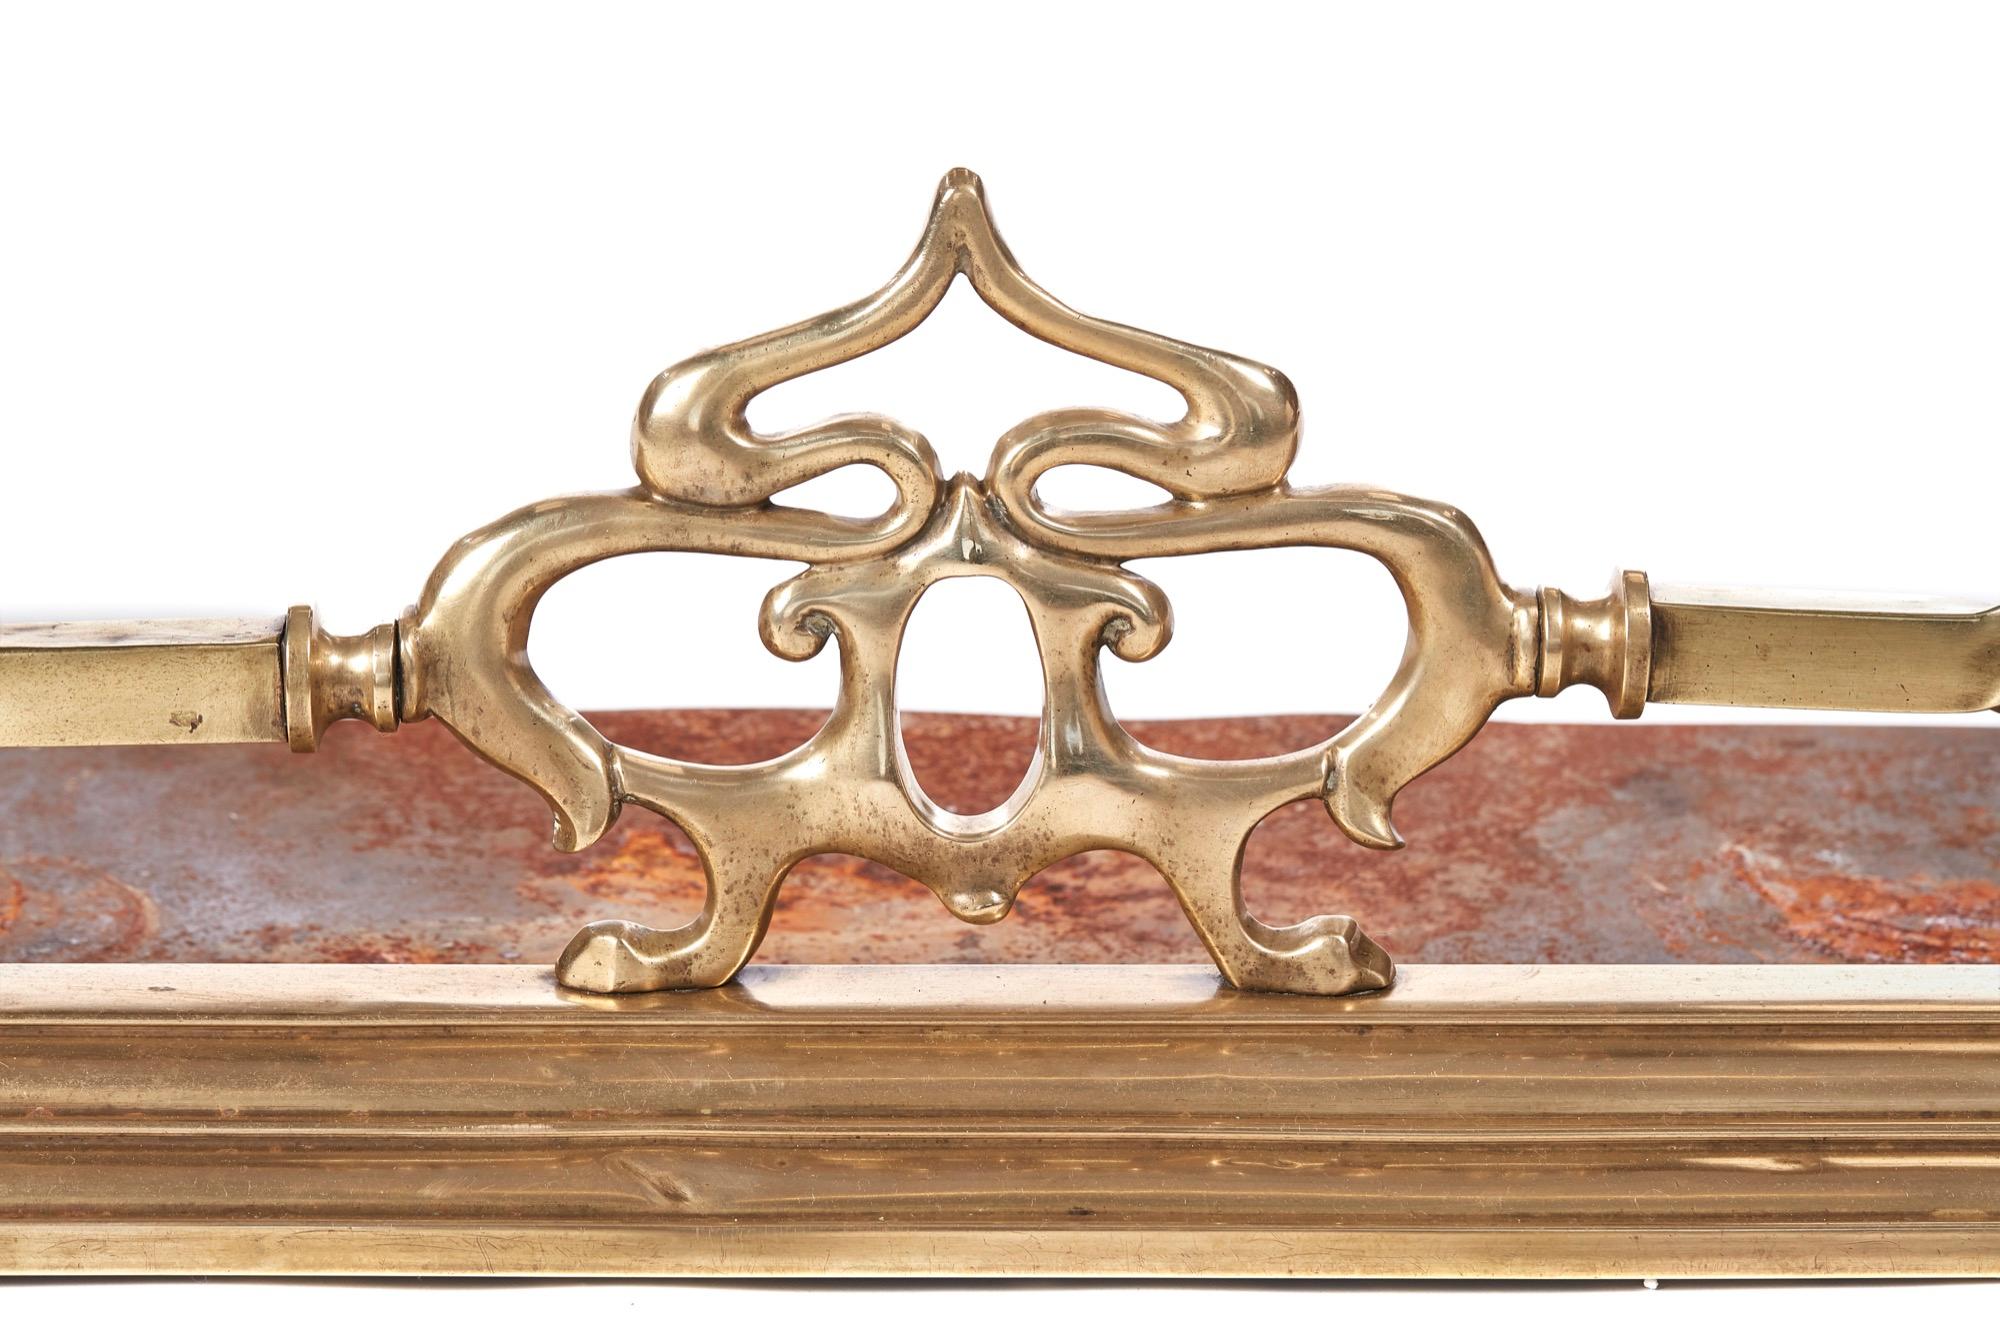 Quality antique brass Art Nouveau fender, lovely shaped design and original condition.
Measures: 55